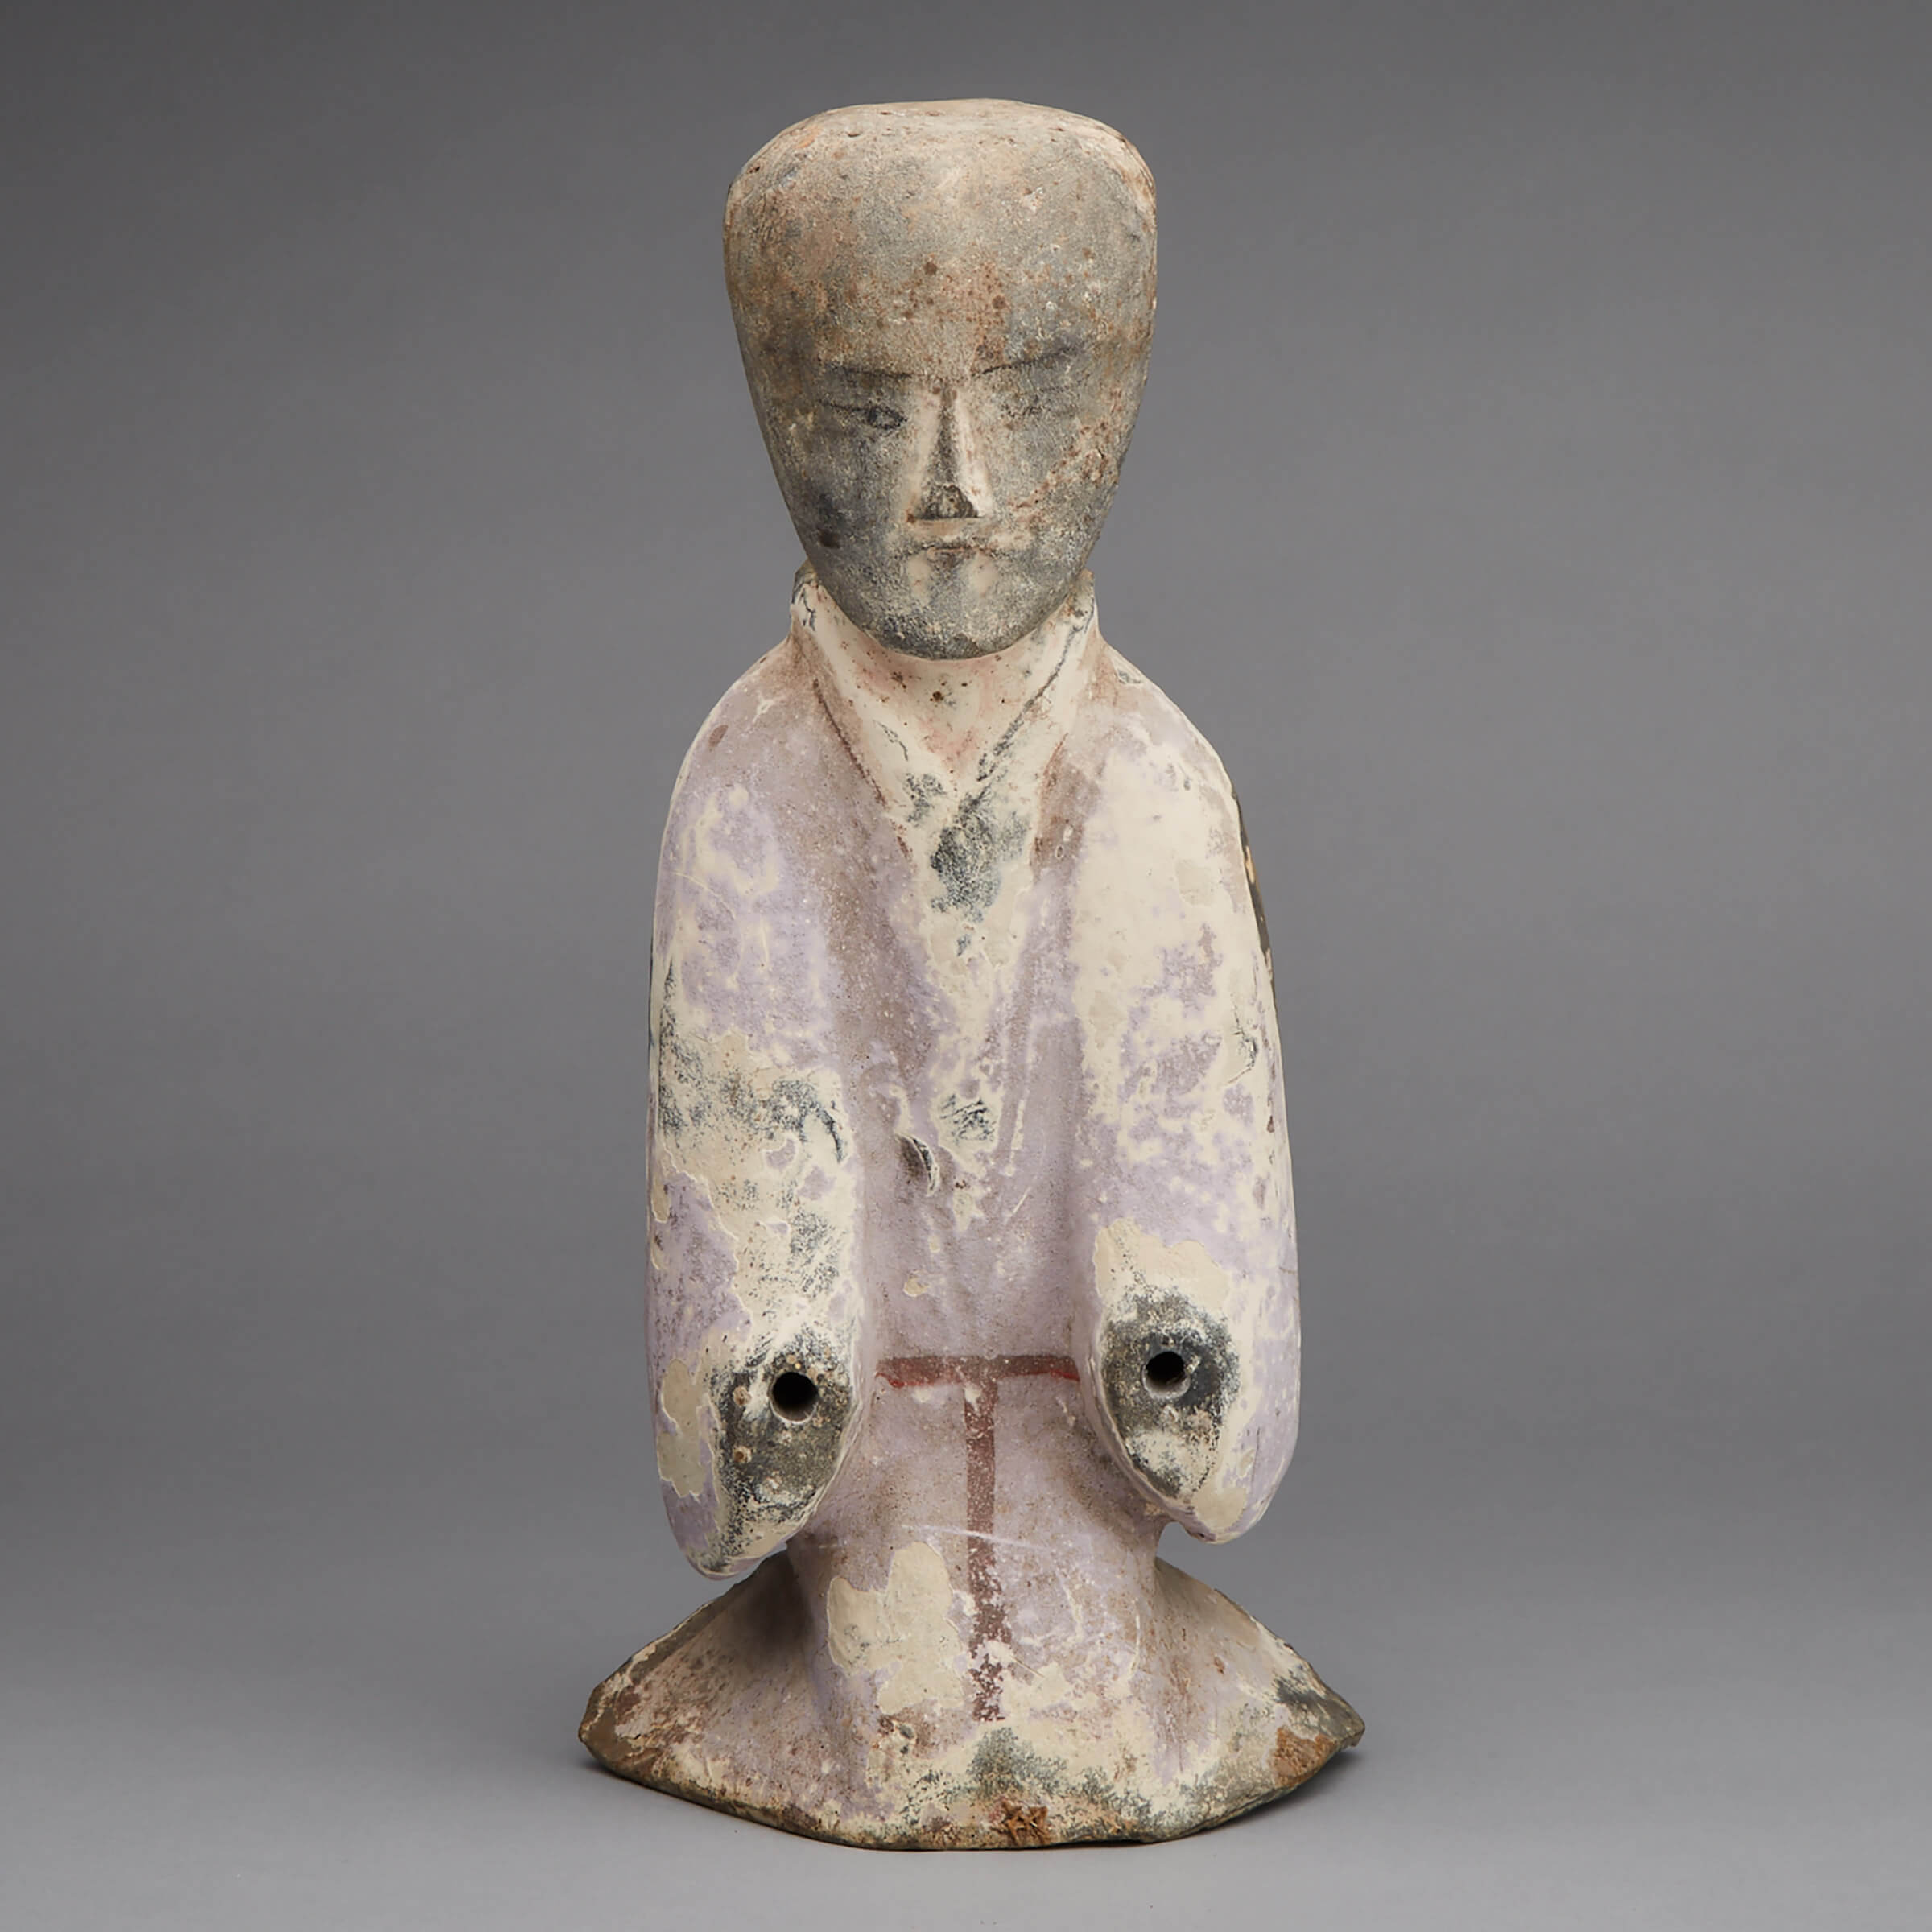 A Grey Pottery Figure of a Lady, Han Dynasty